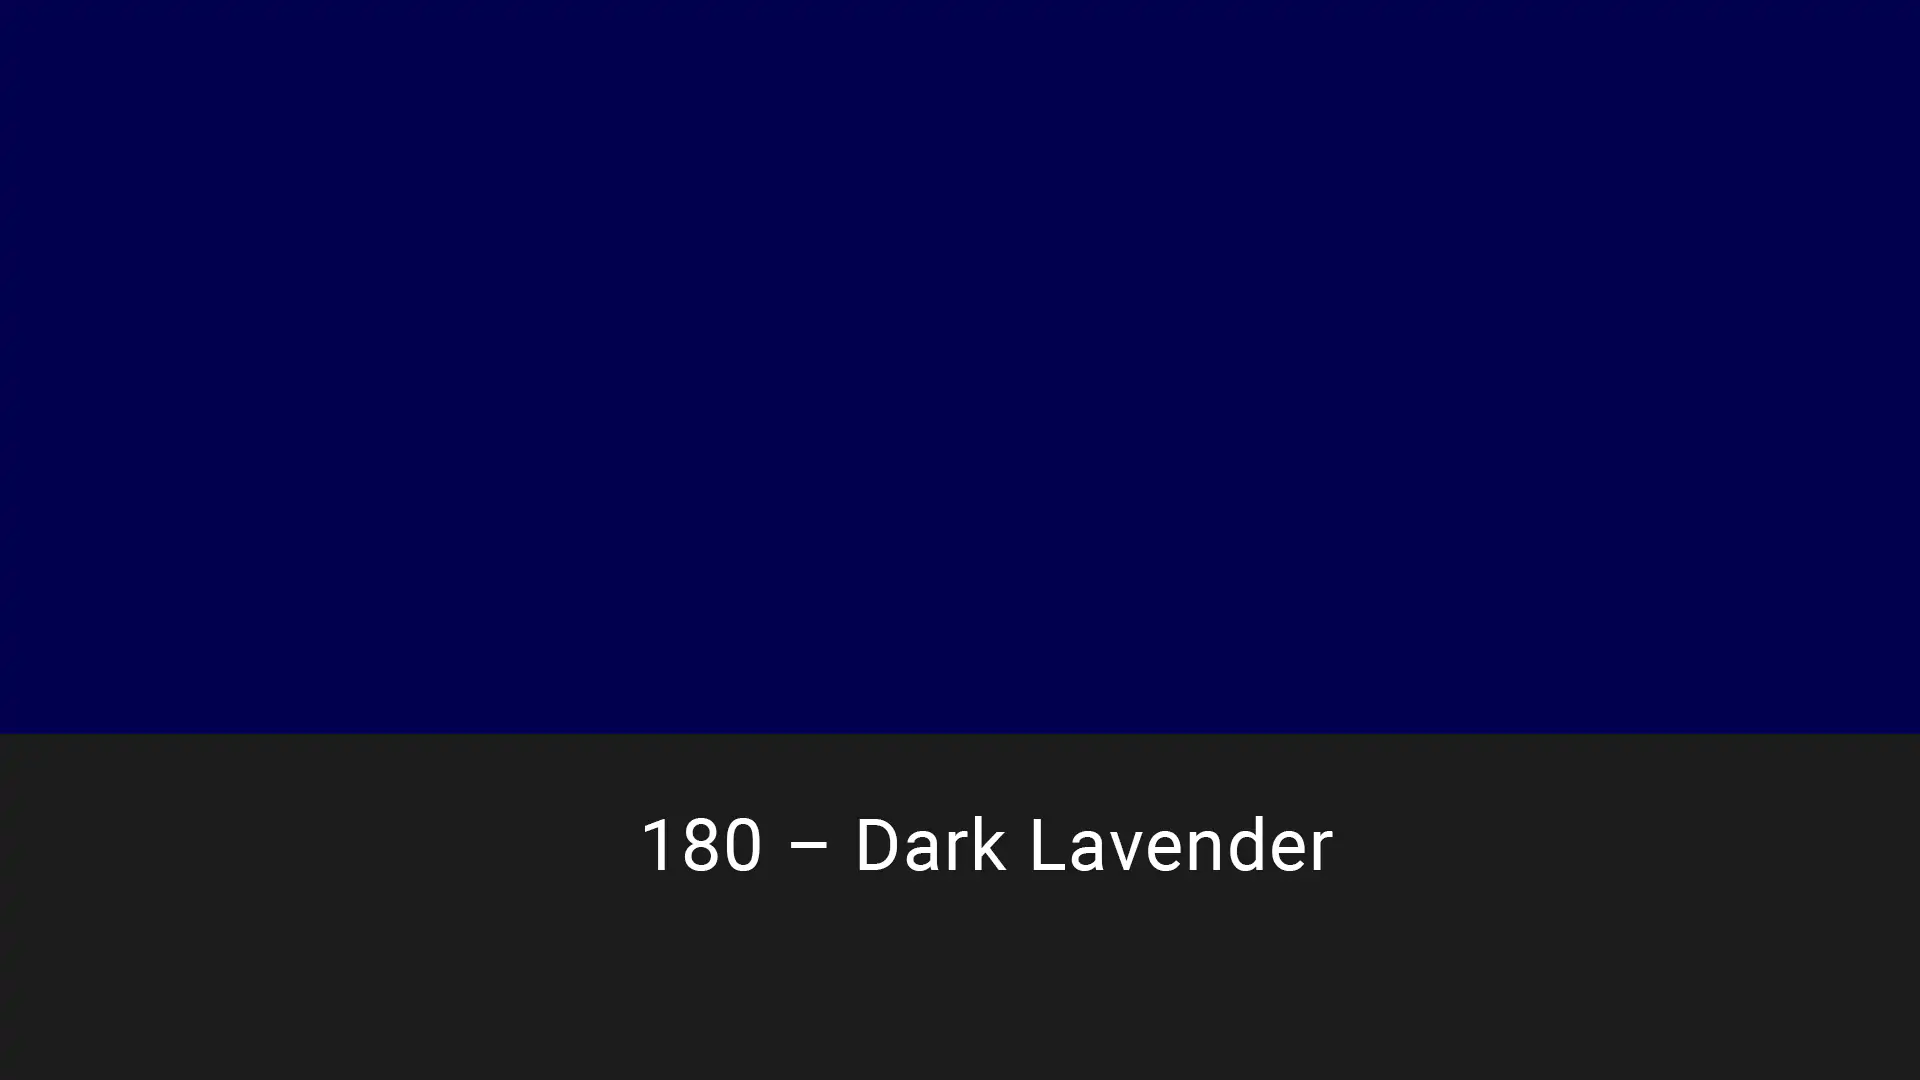 Cotech filters 180 Dark Lavender